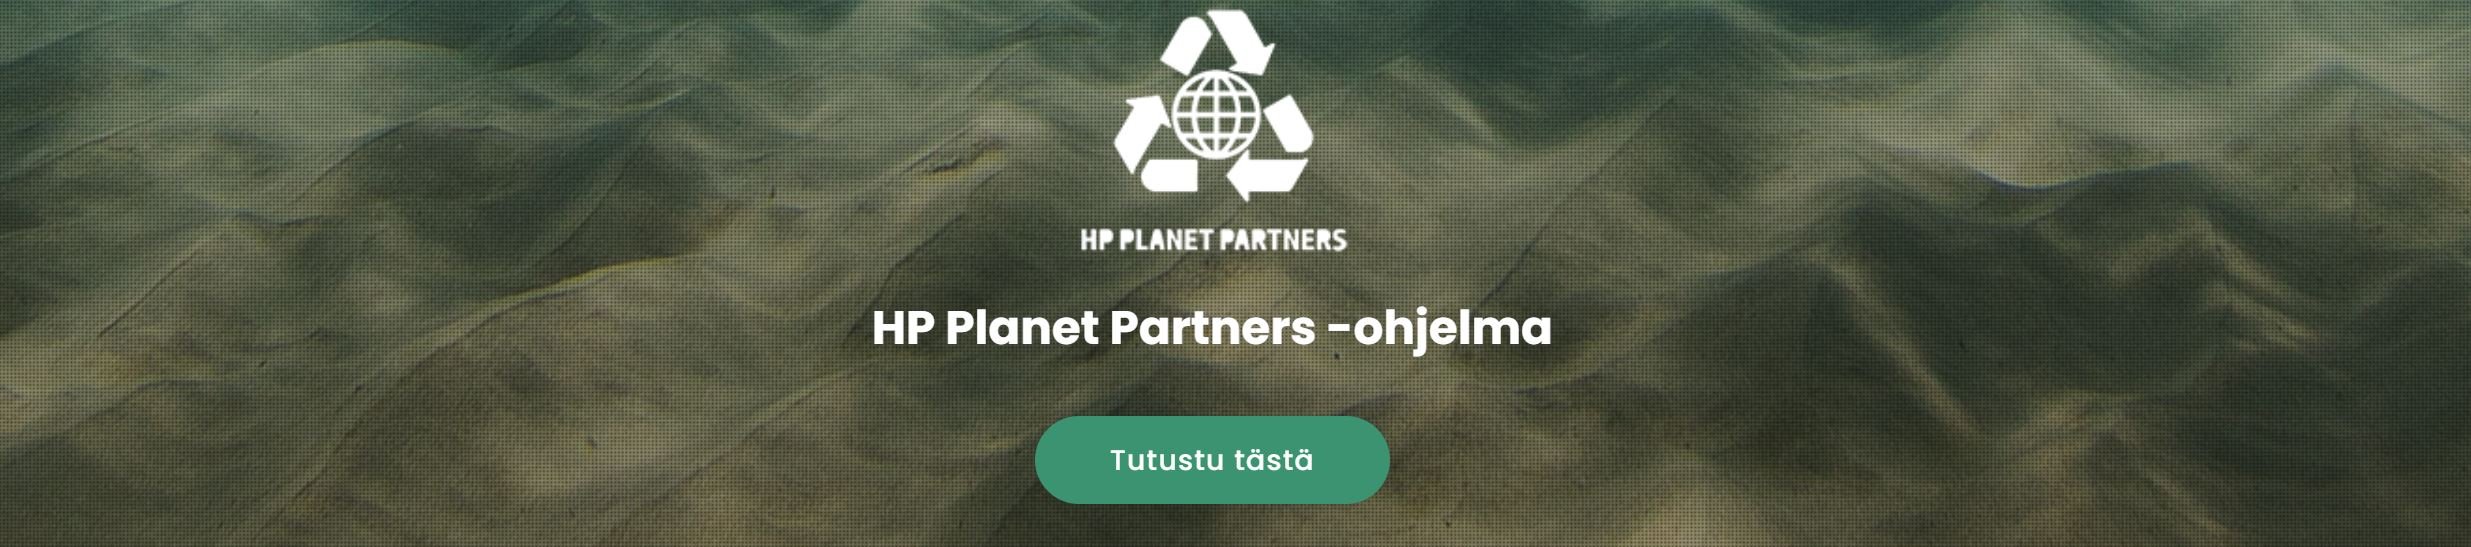 planet partners